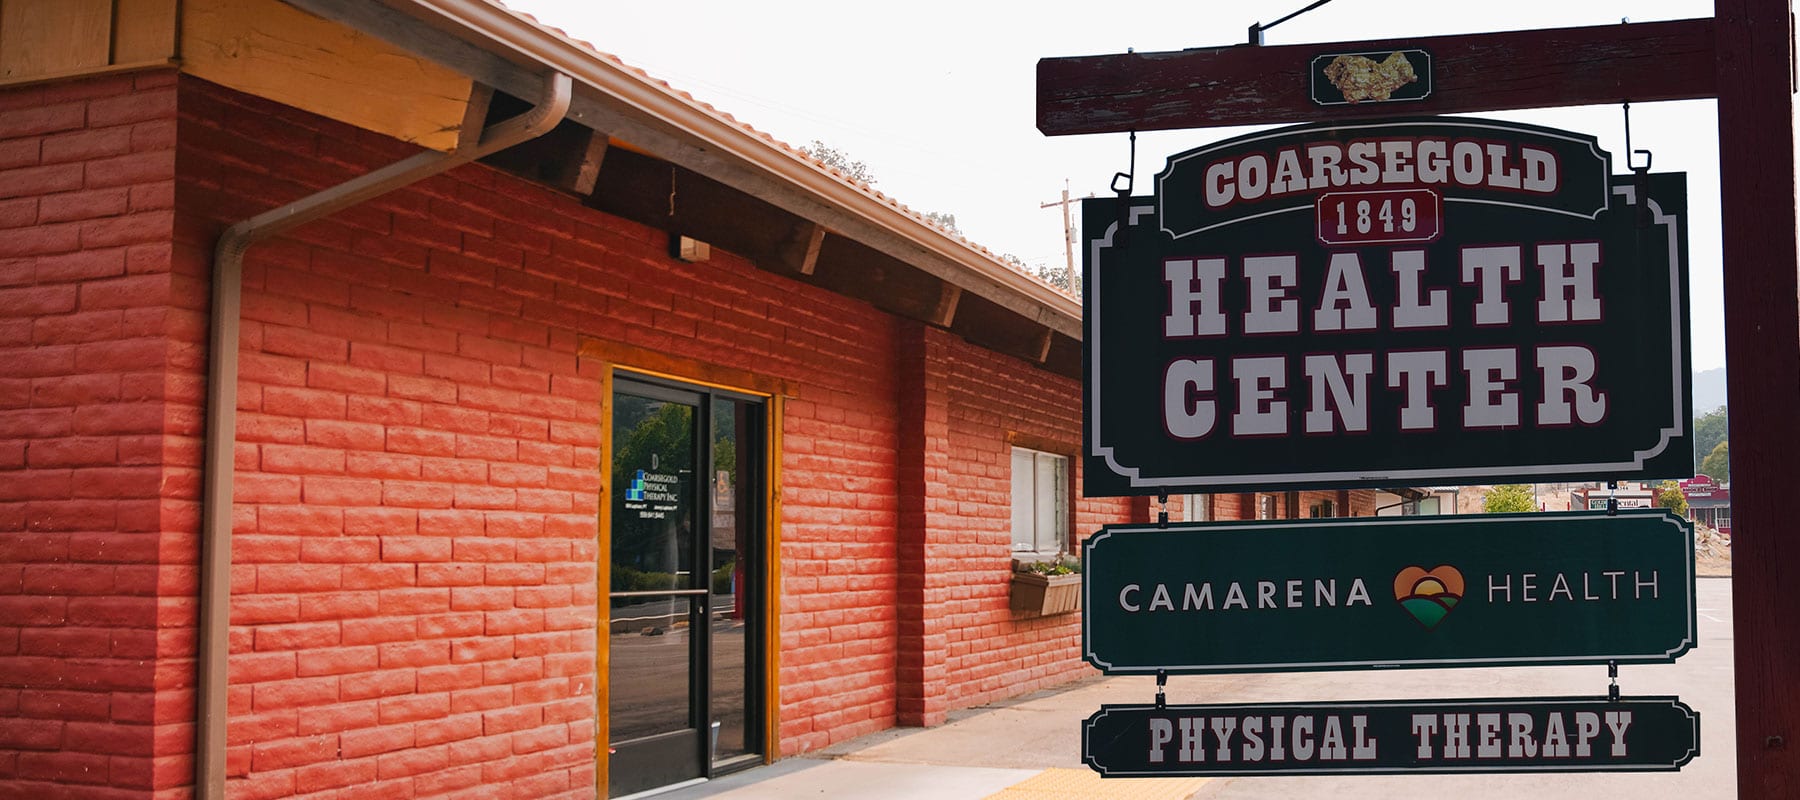 Camarena Health - Coarsegold Health Center